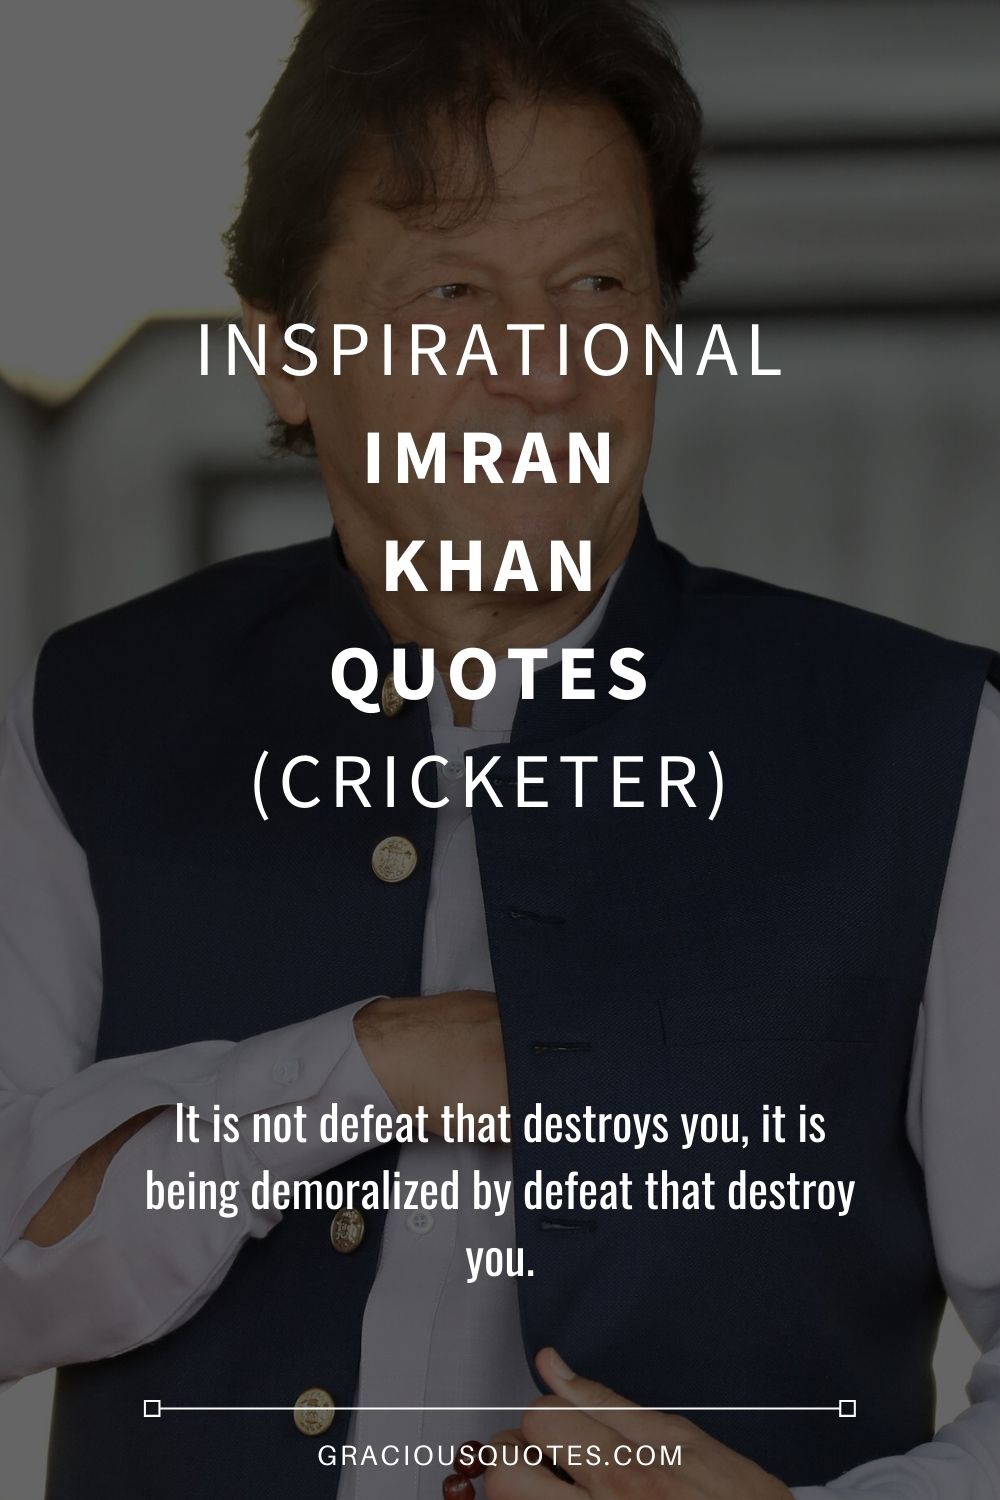 Inspirational Imran Khan Quotes (CRICKETER) - Gracious Quotes